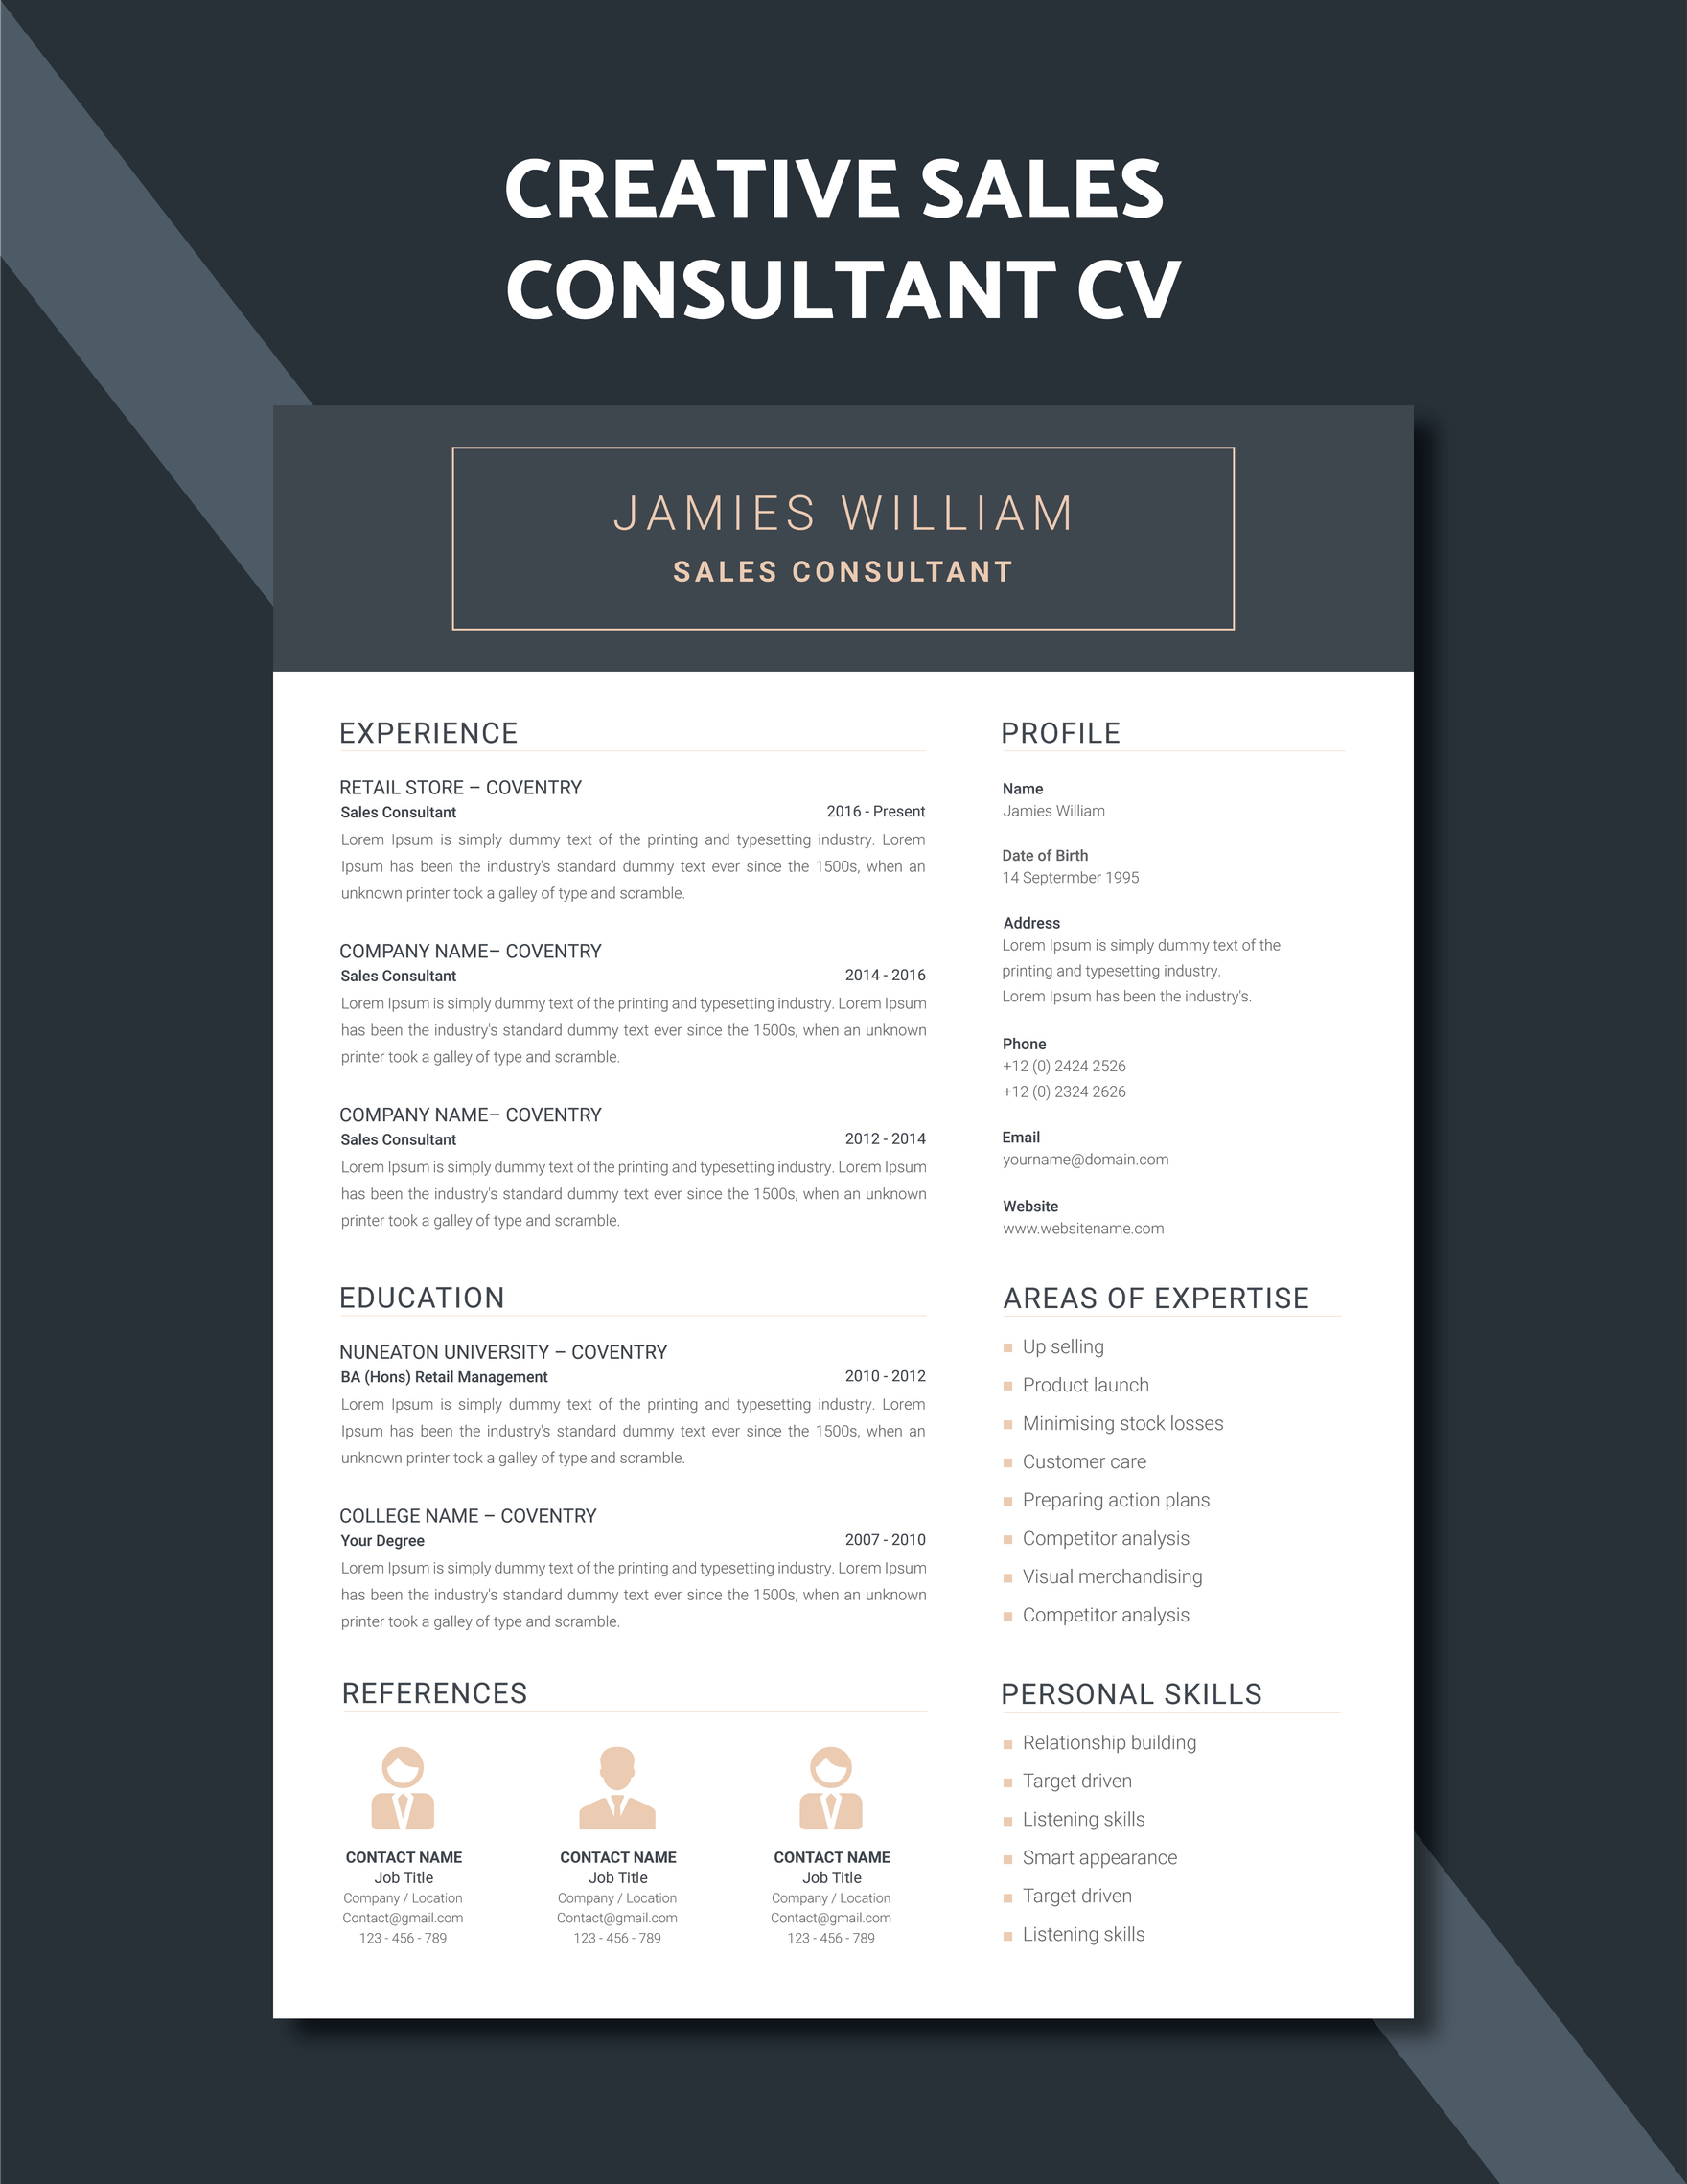 Creative Sales Consultant CV Template